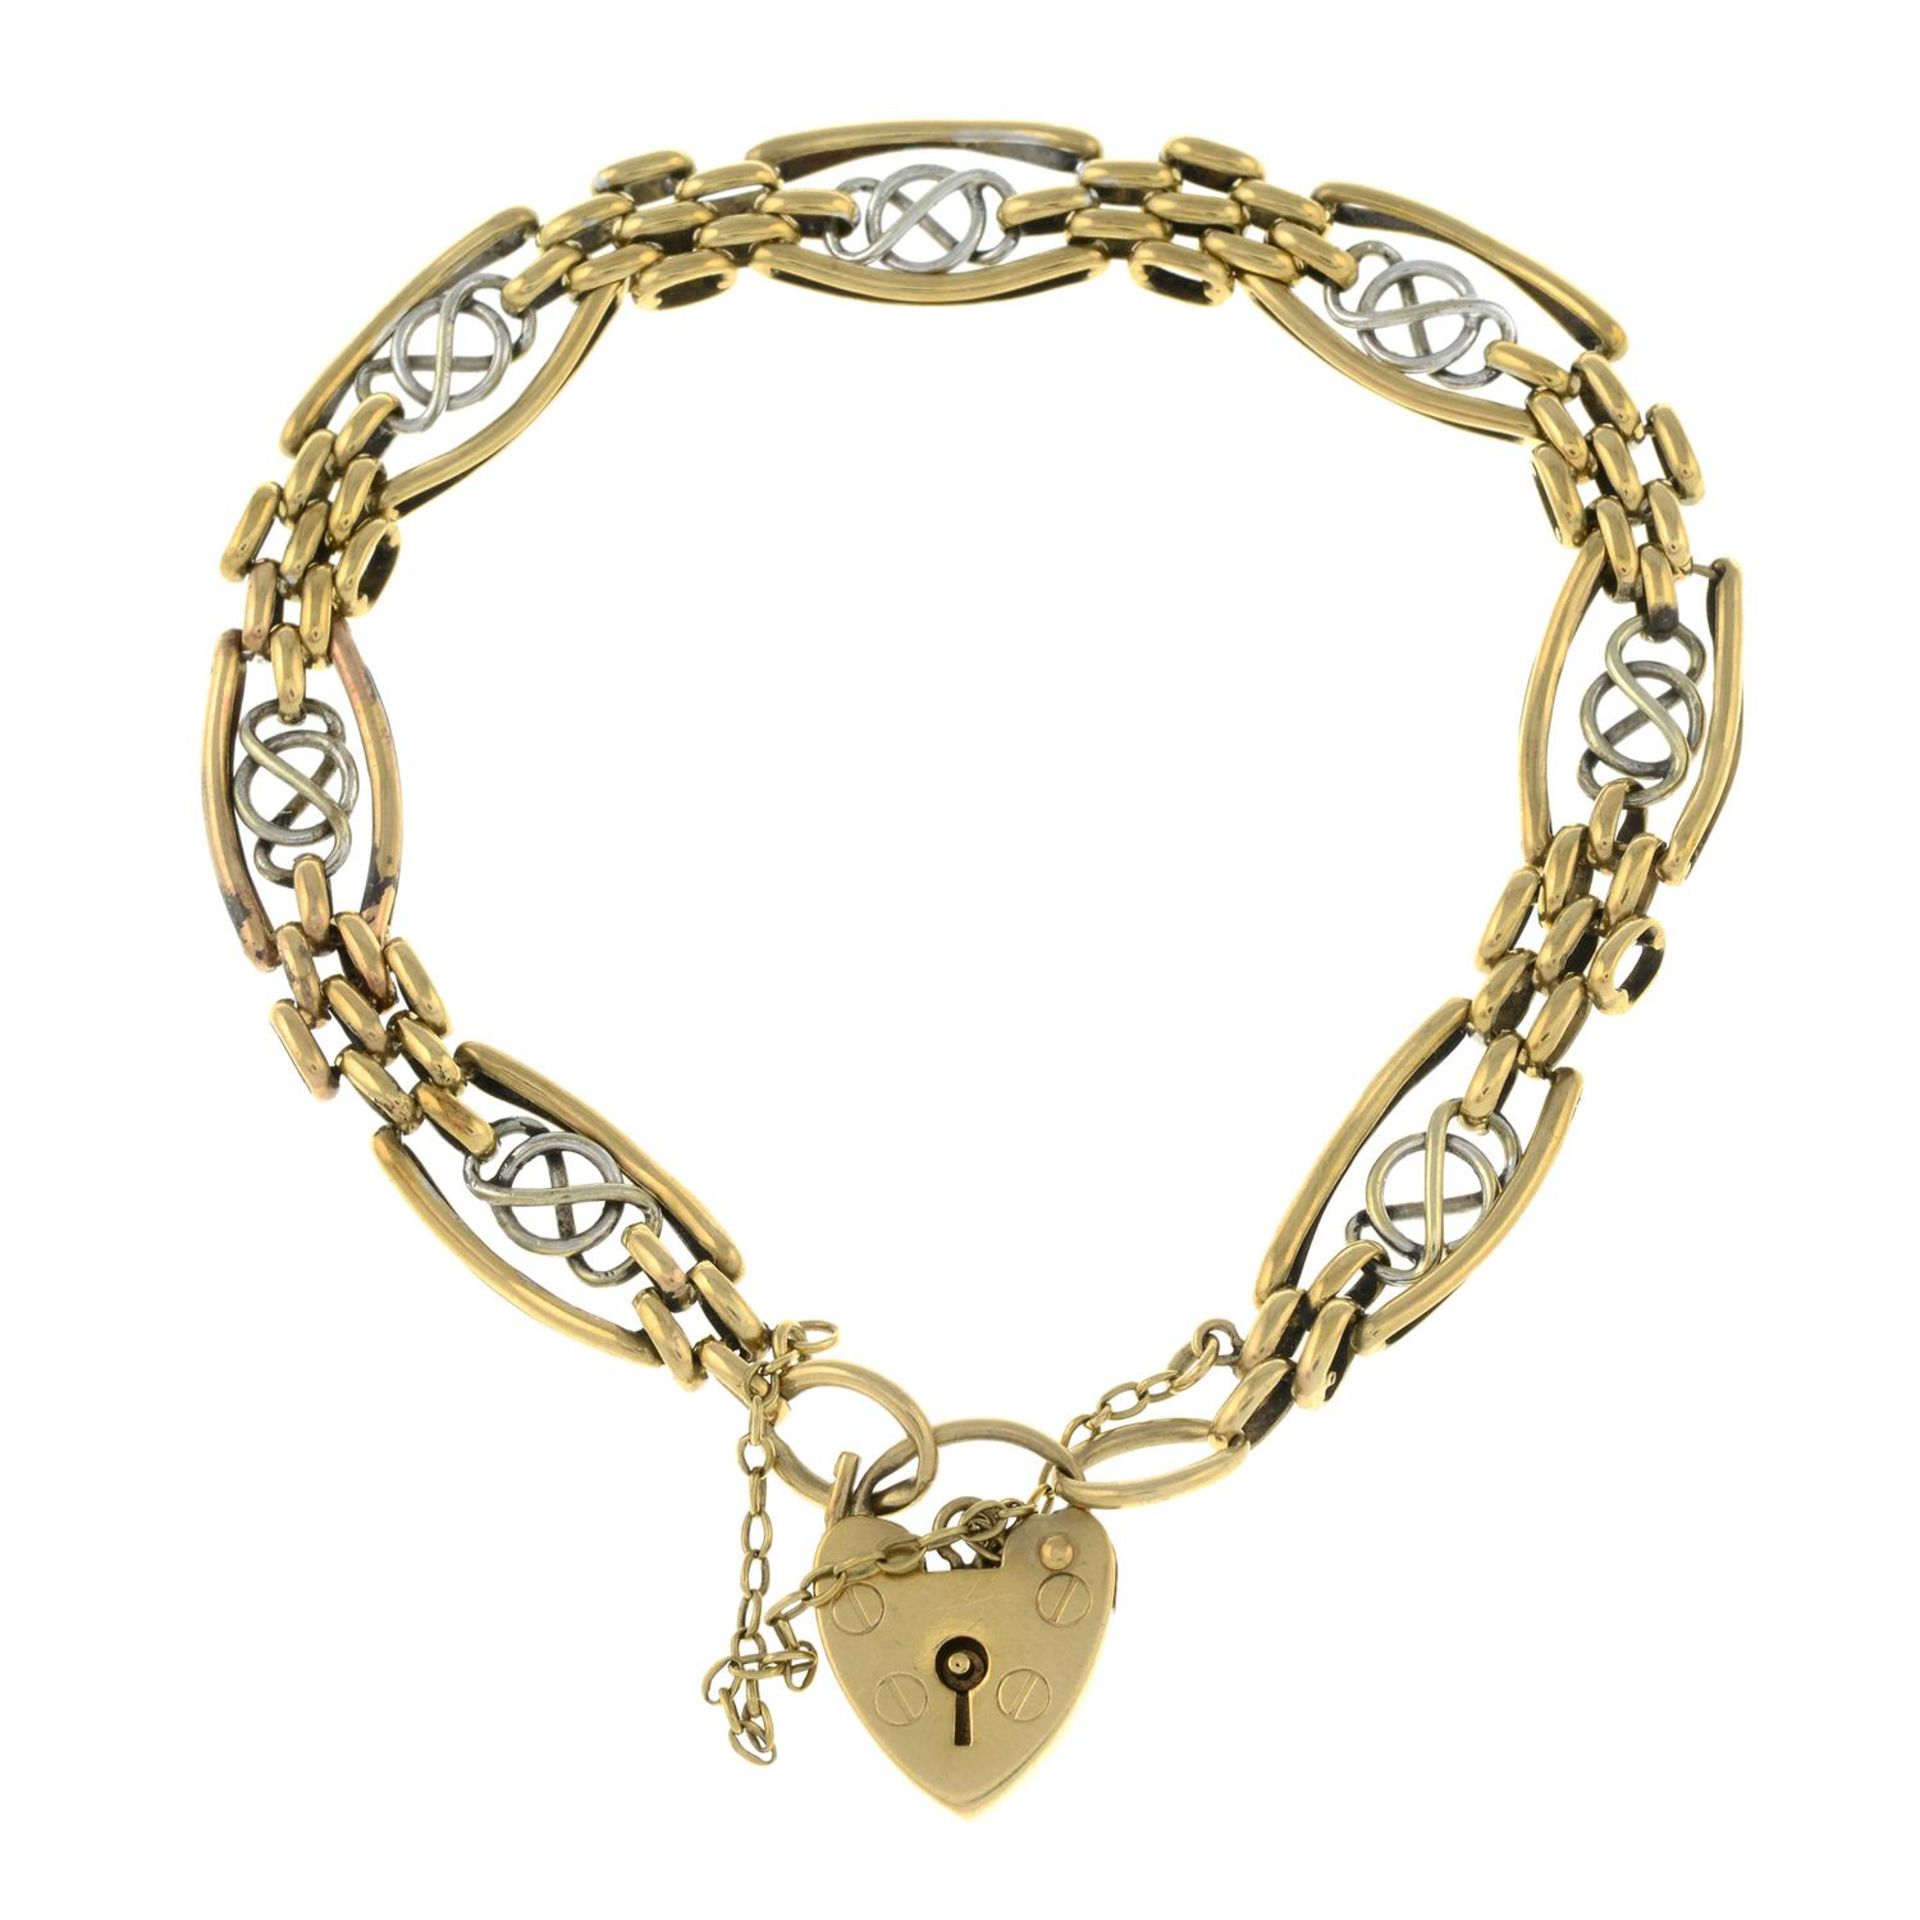 A 9ct bi-colour gold fancy-link charm bracelet, with heart-shaped padlock clasp.